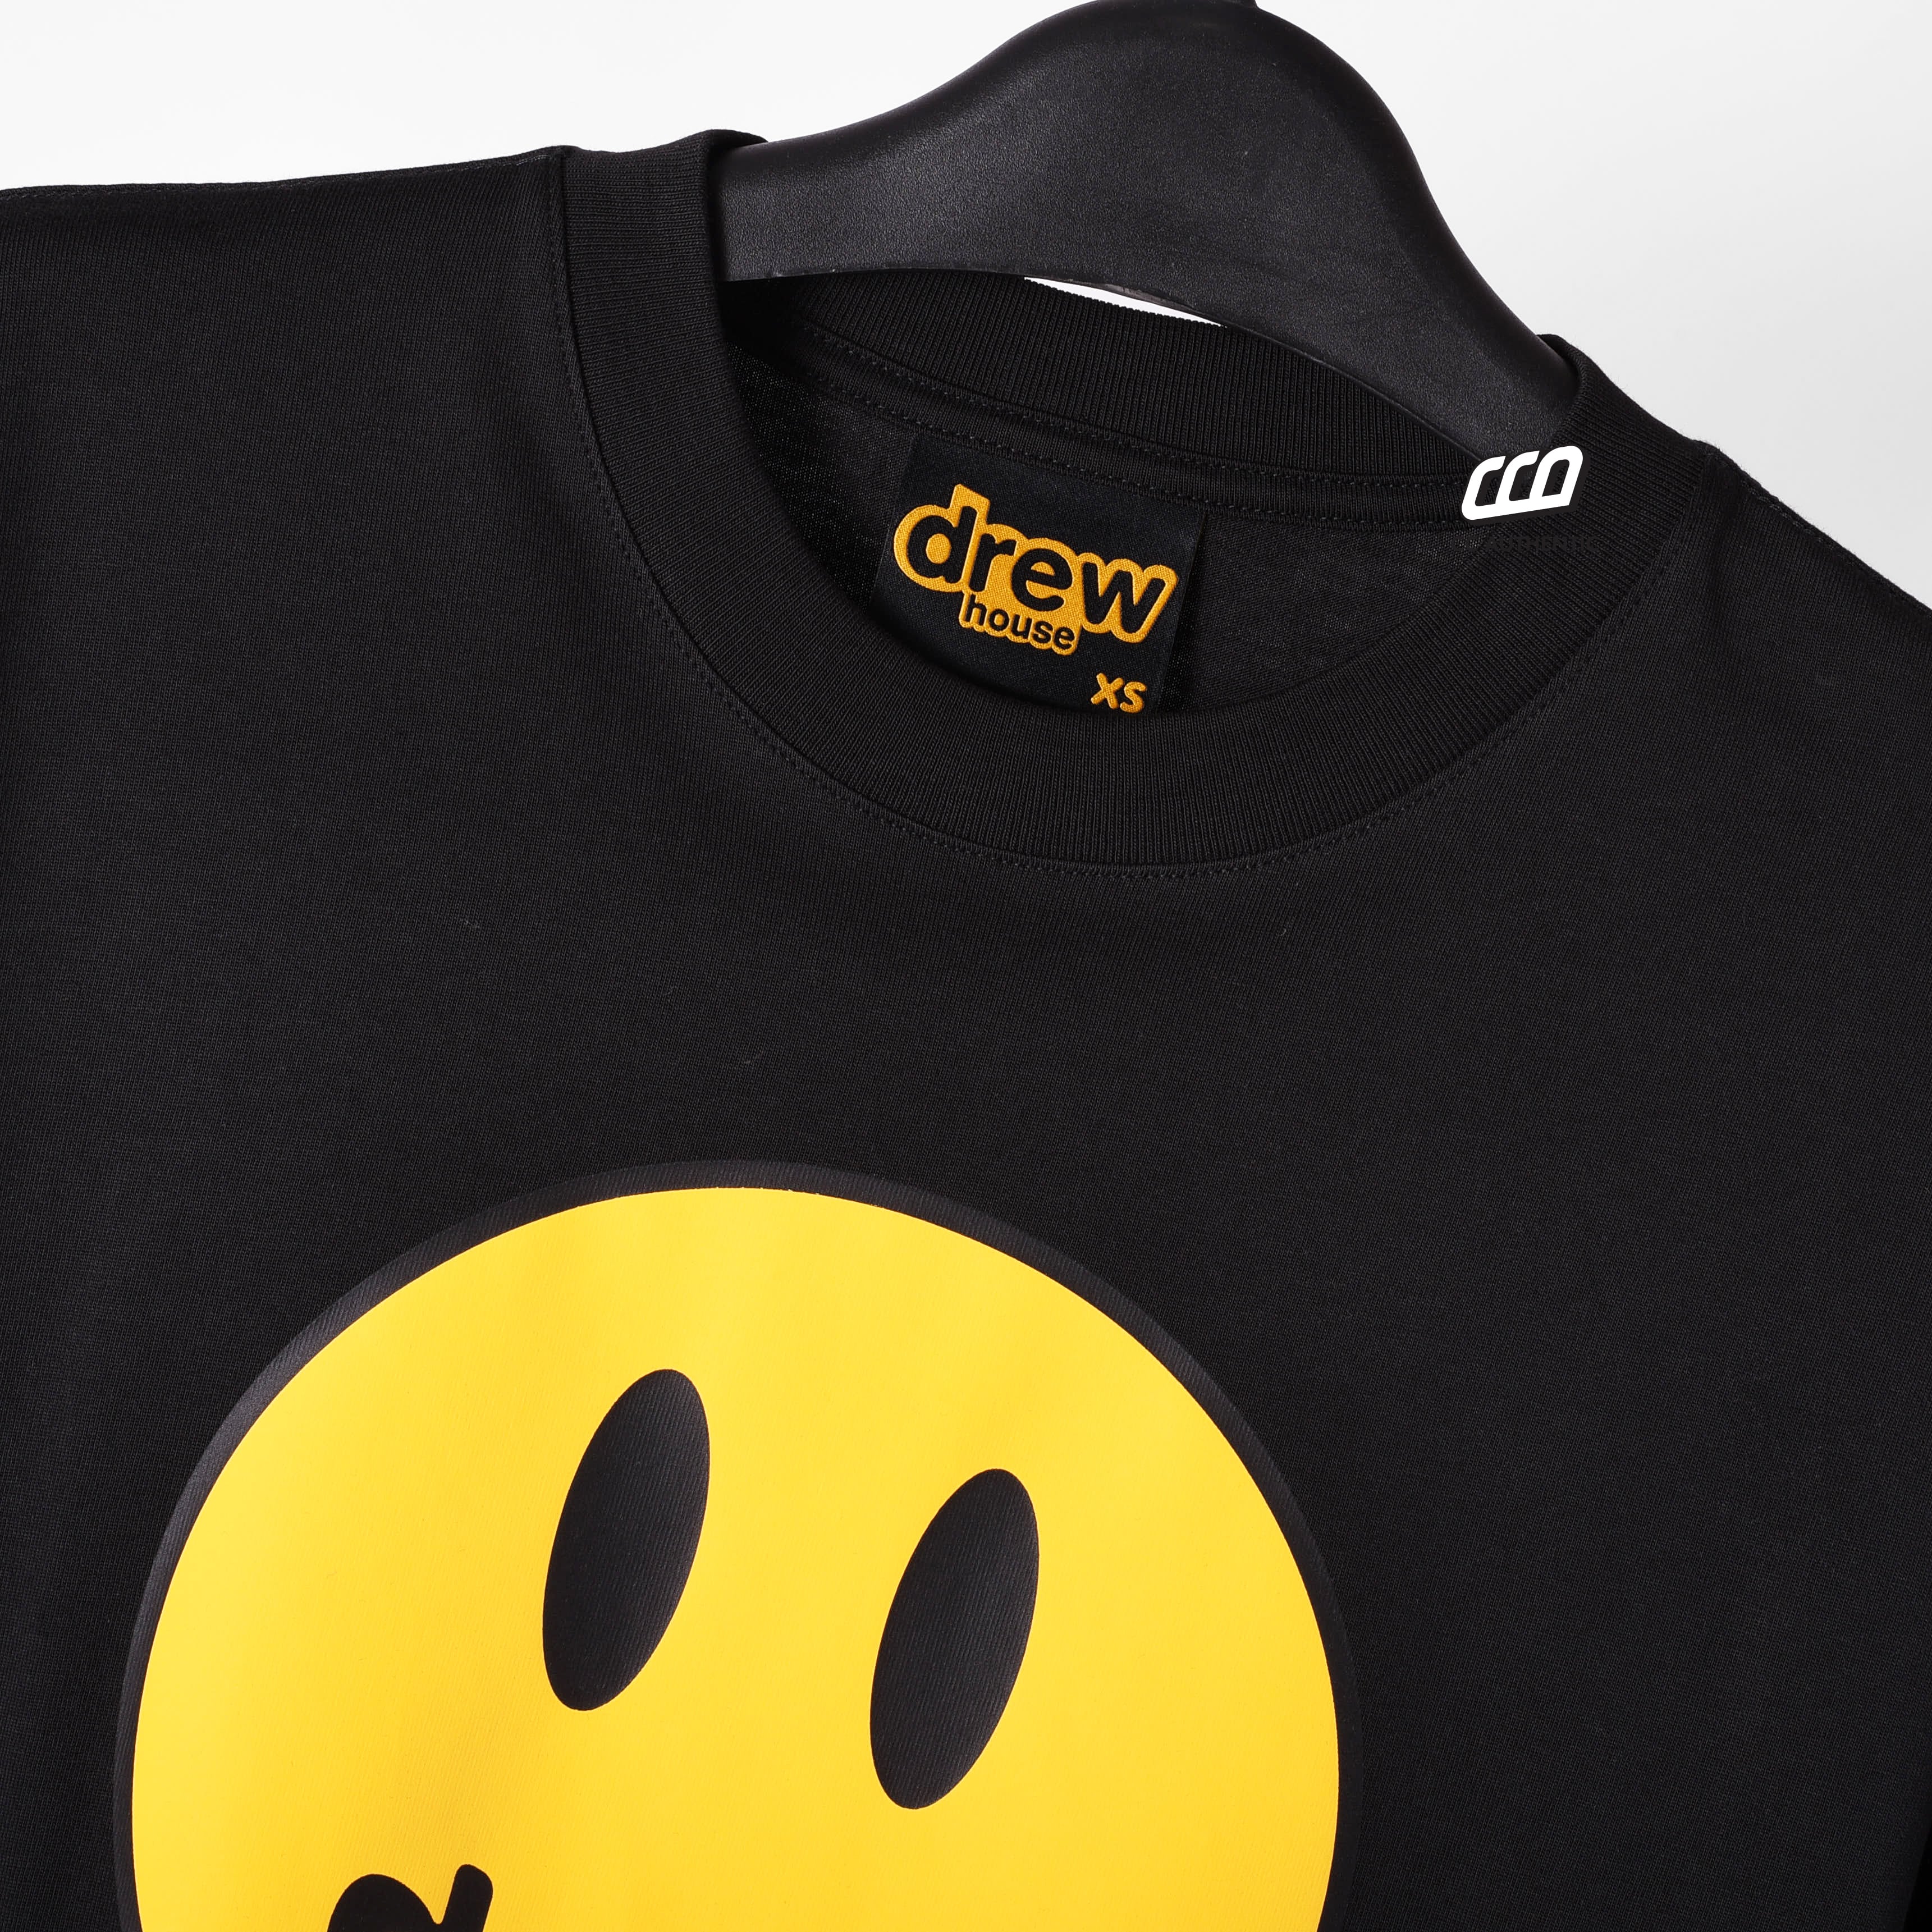 Drew House Mascot SS T-shirt - Black